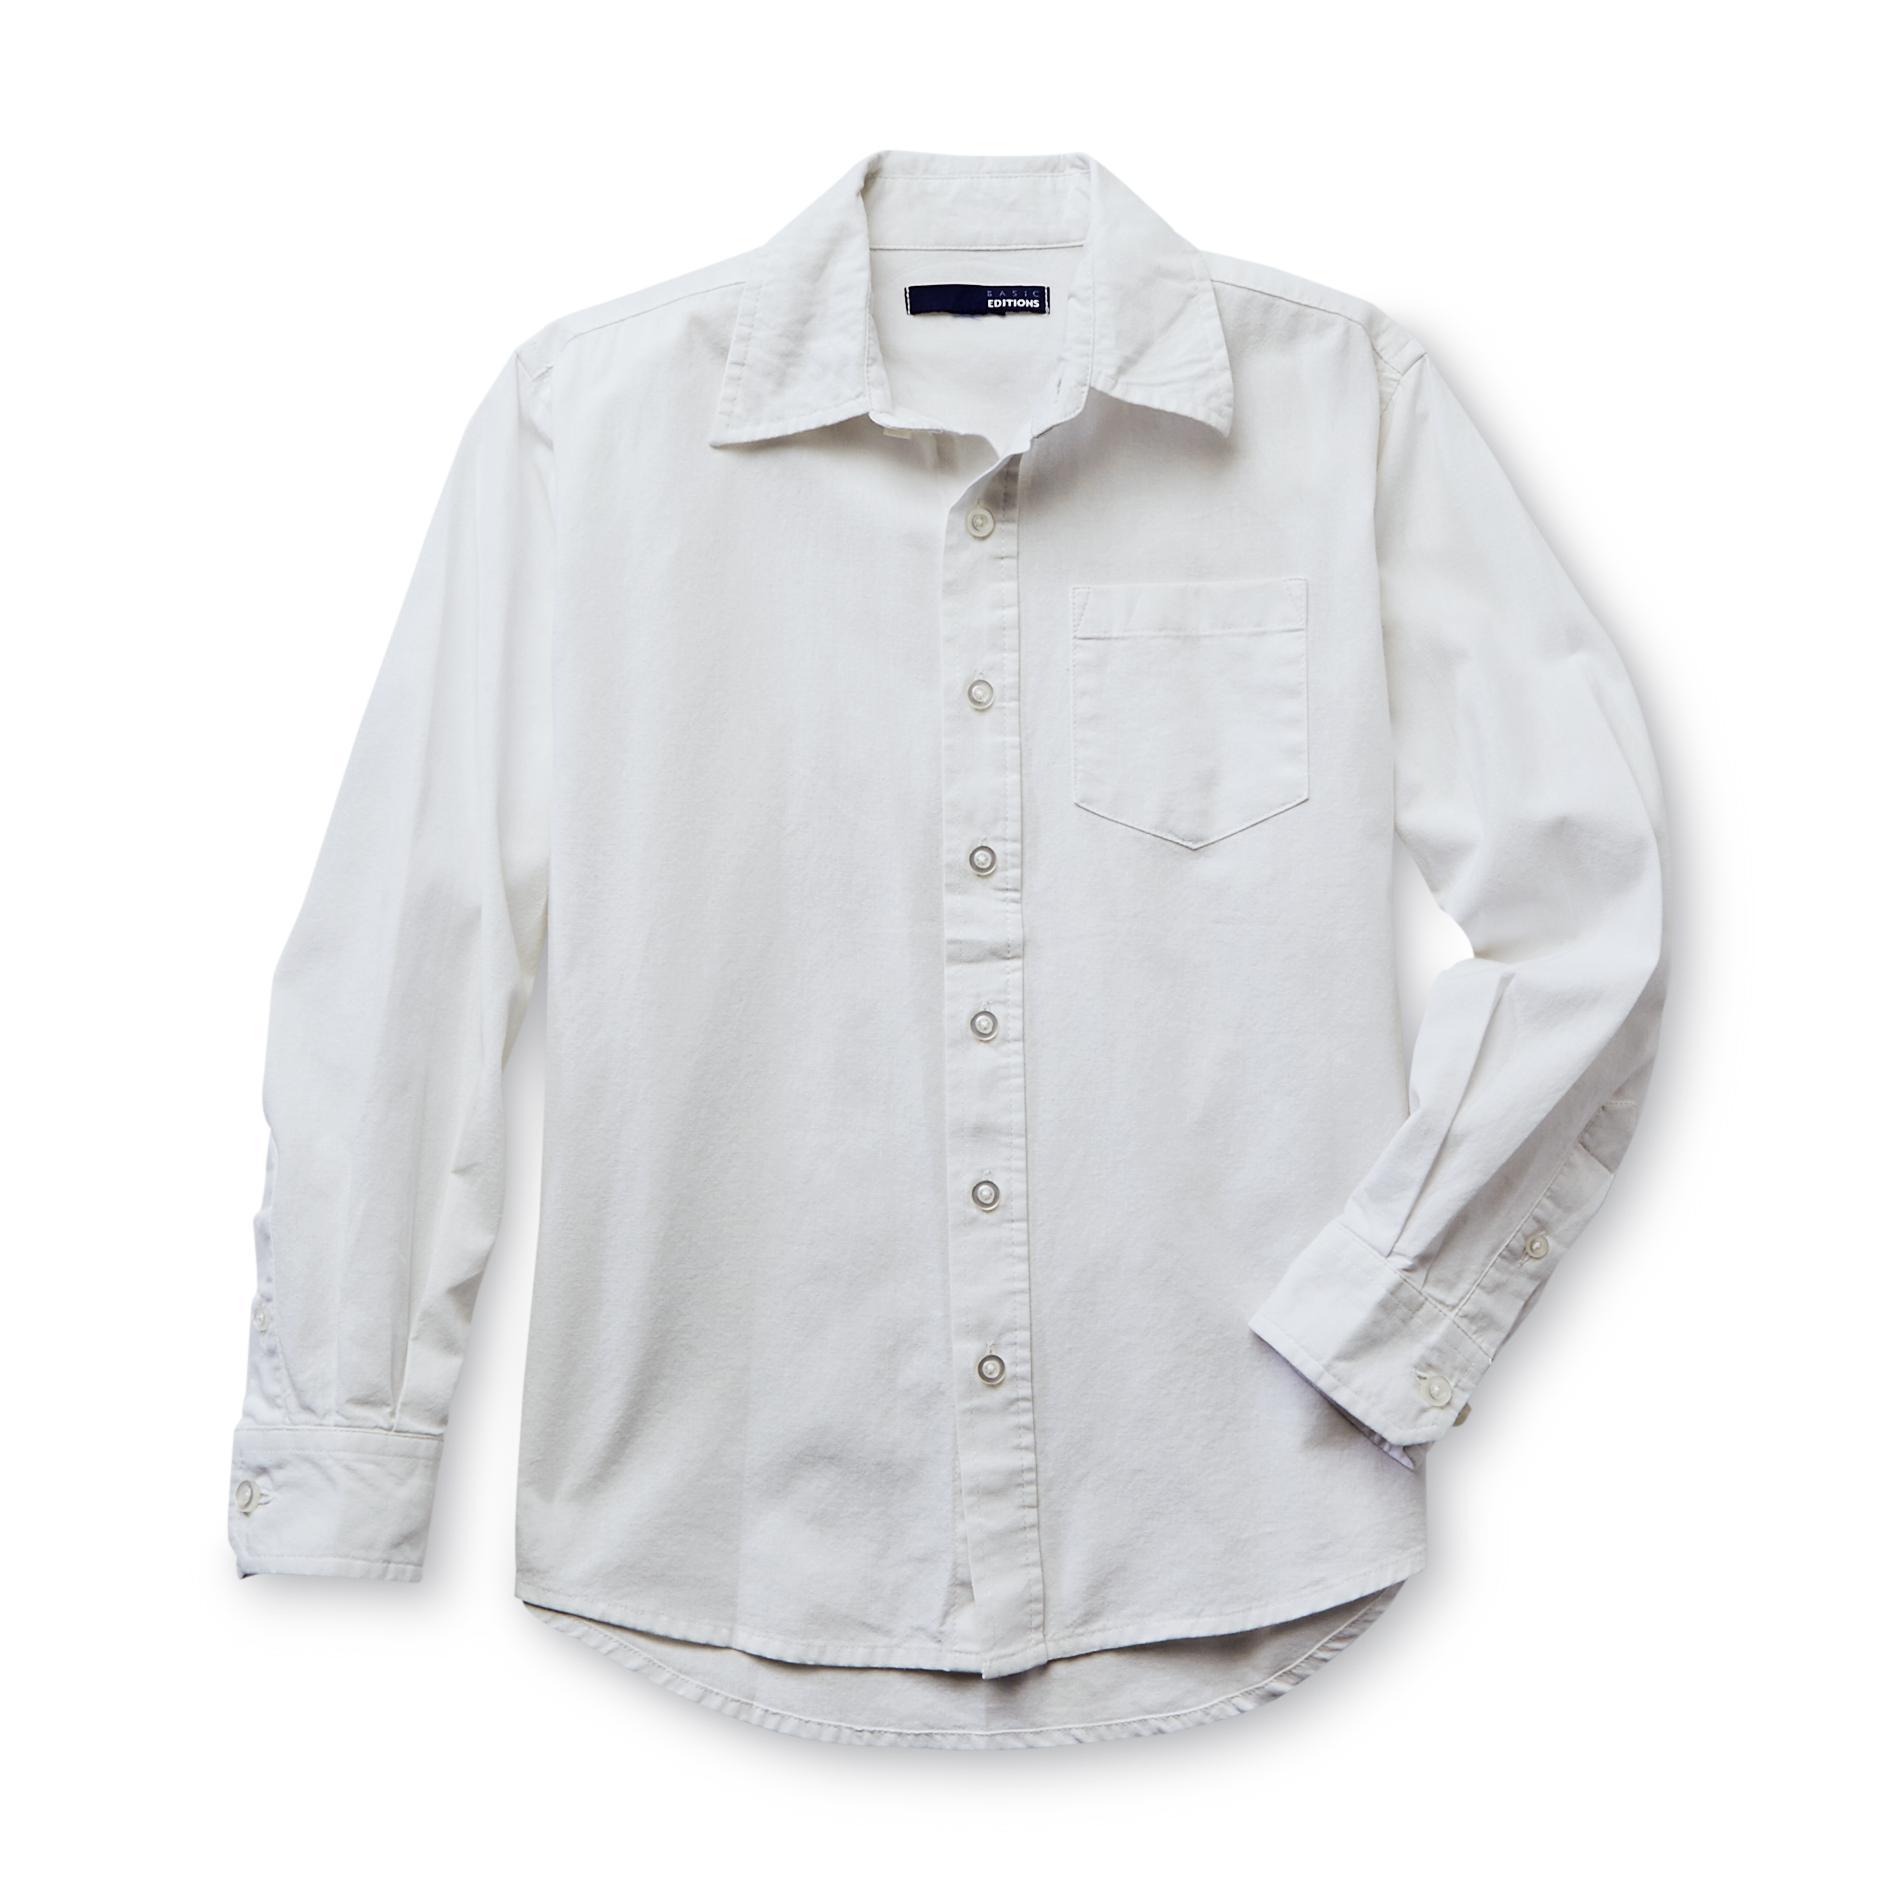 Basic Editions Boy's Long-Sleeve Oxford Dress Shirt